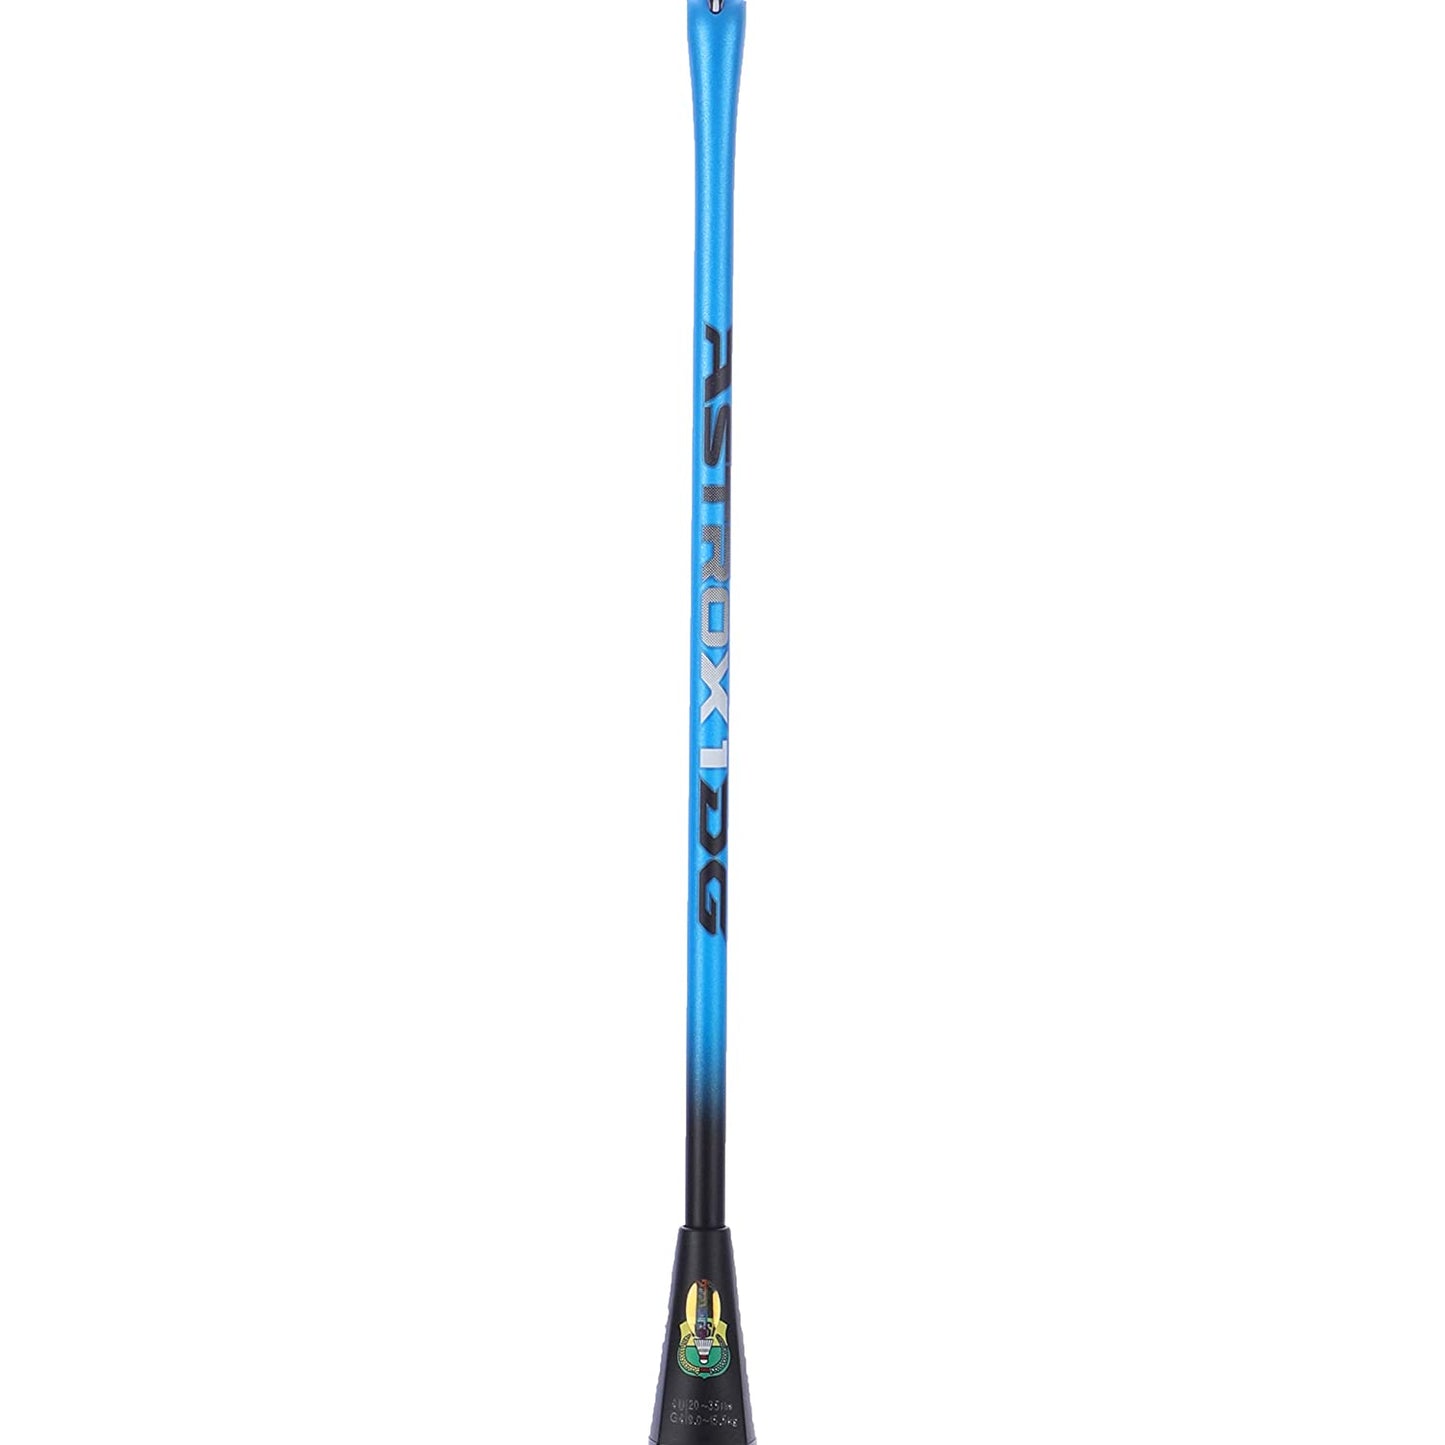 Yonex Astrox 1 DG Badminton Racquet - Blue/Black - Best Price online Prokicksports.com